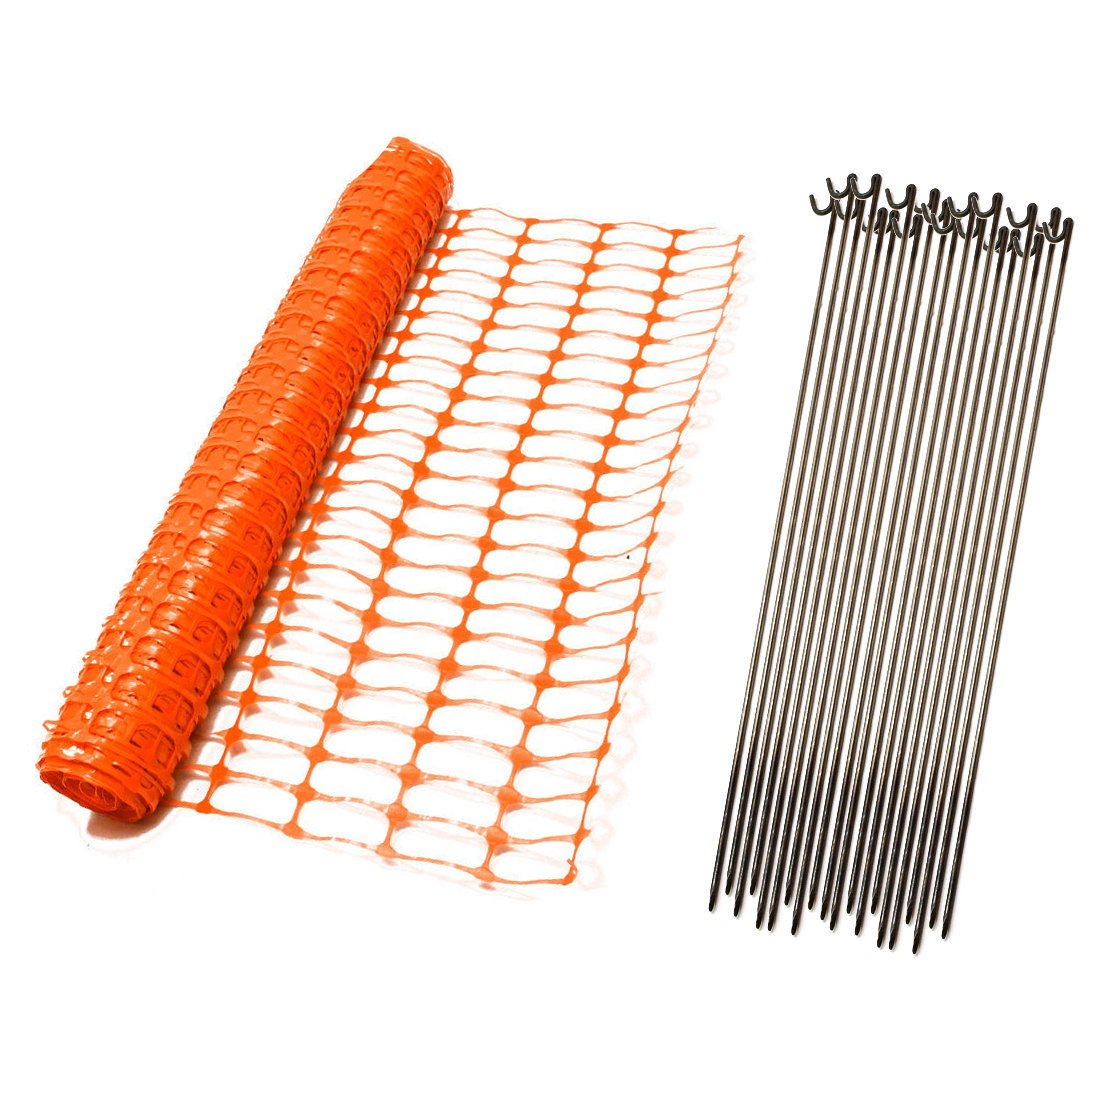 50m Black Plastic Mesh Barrier Safety Fencing Netting & 20 Black Plastic Pins 